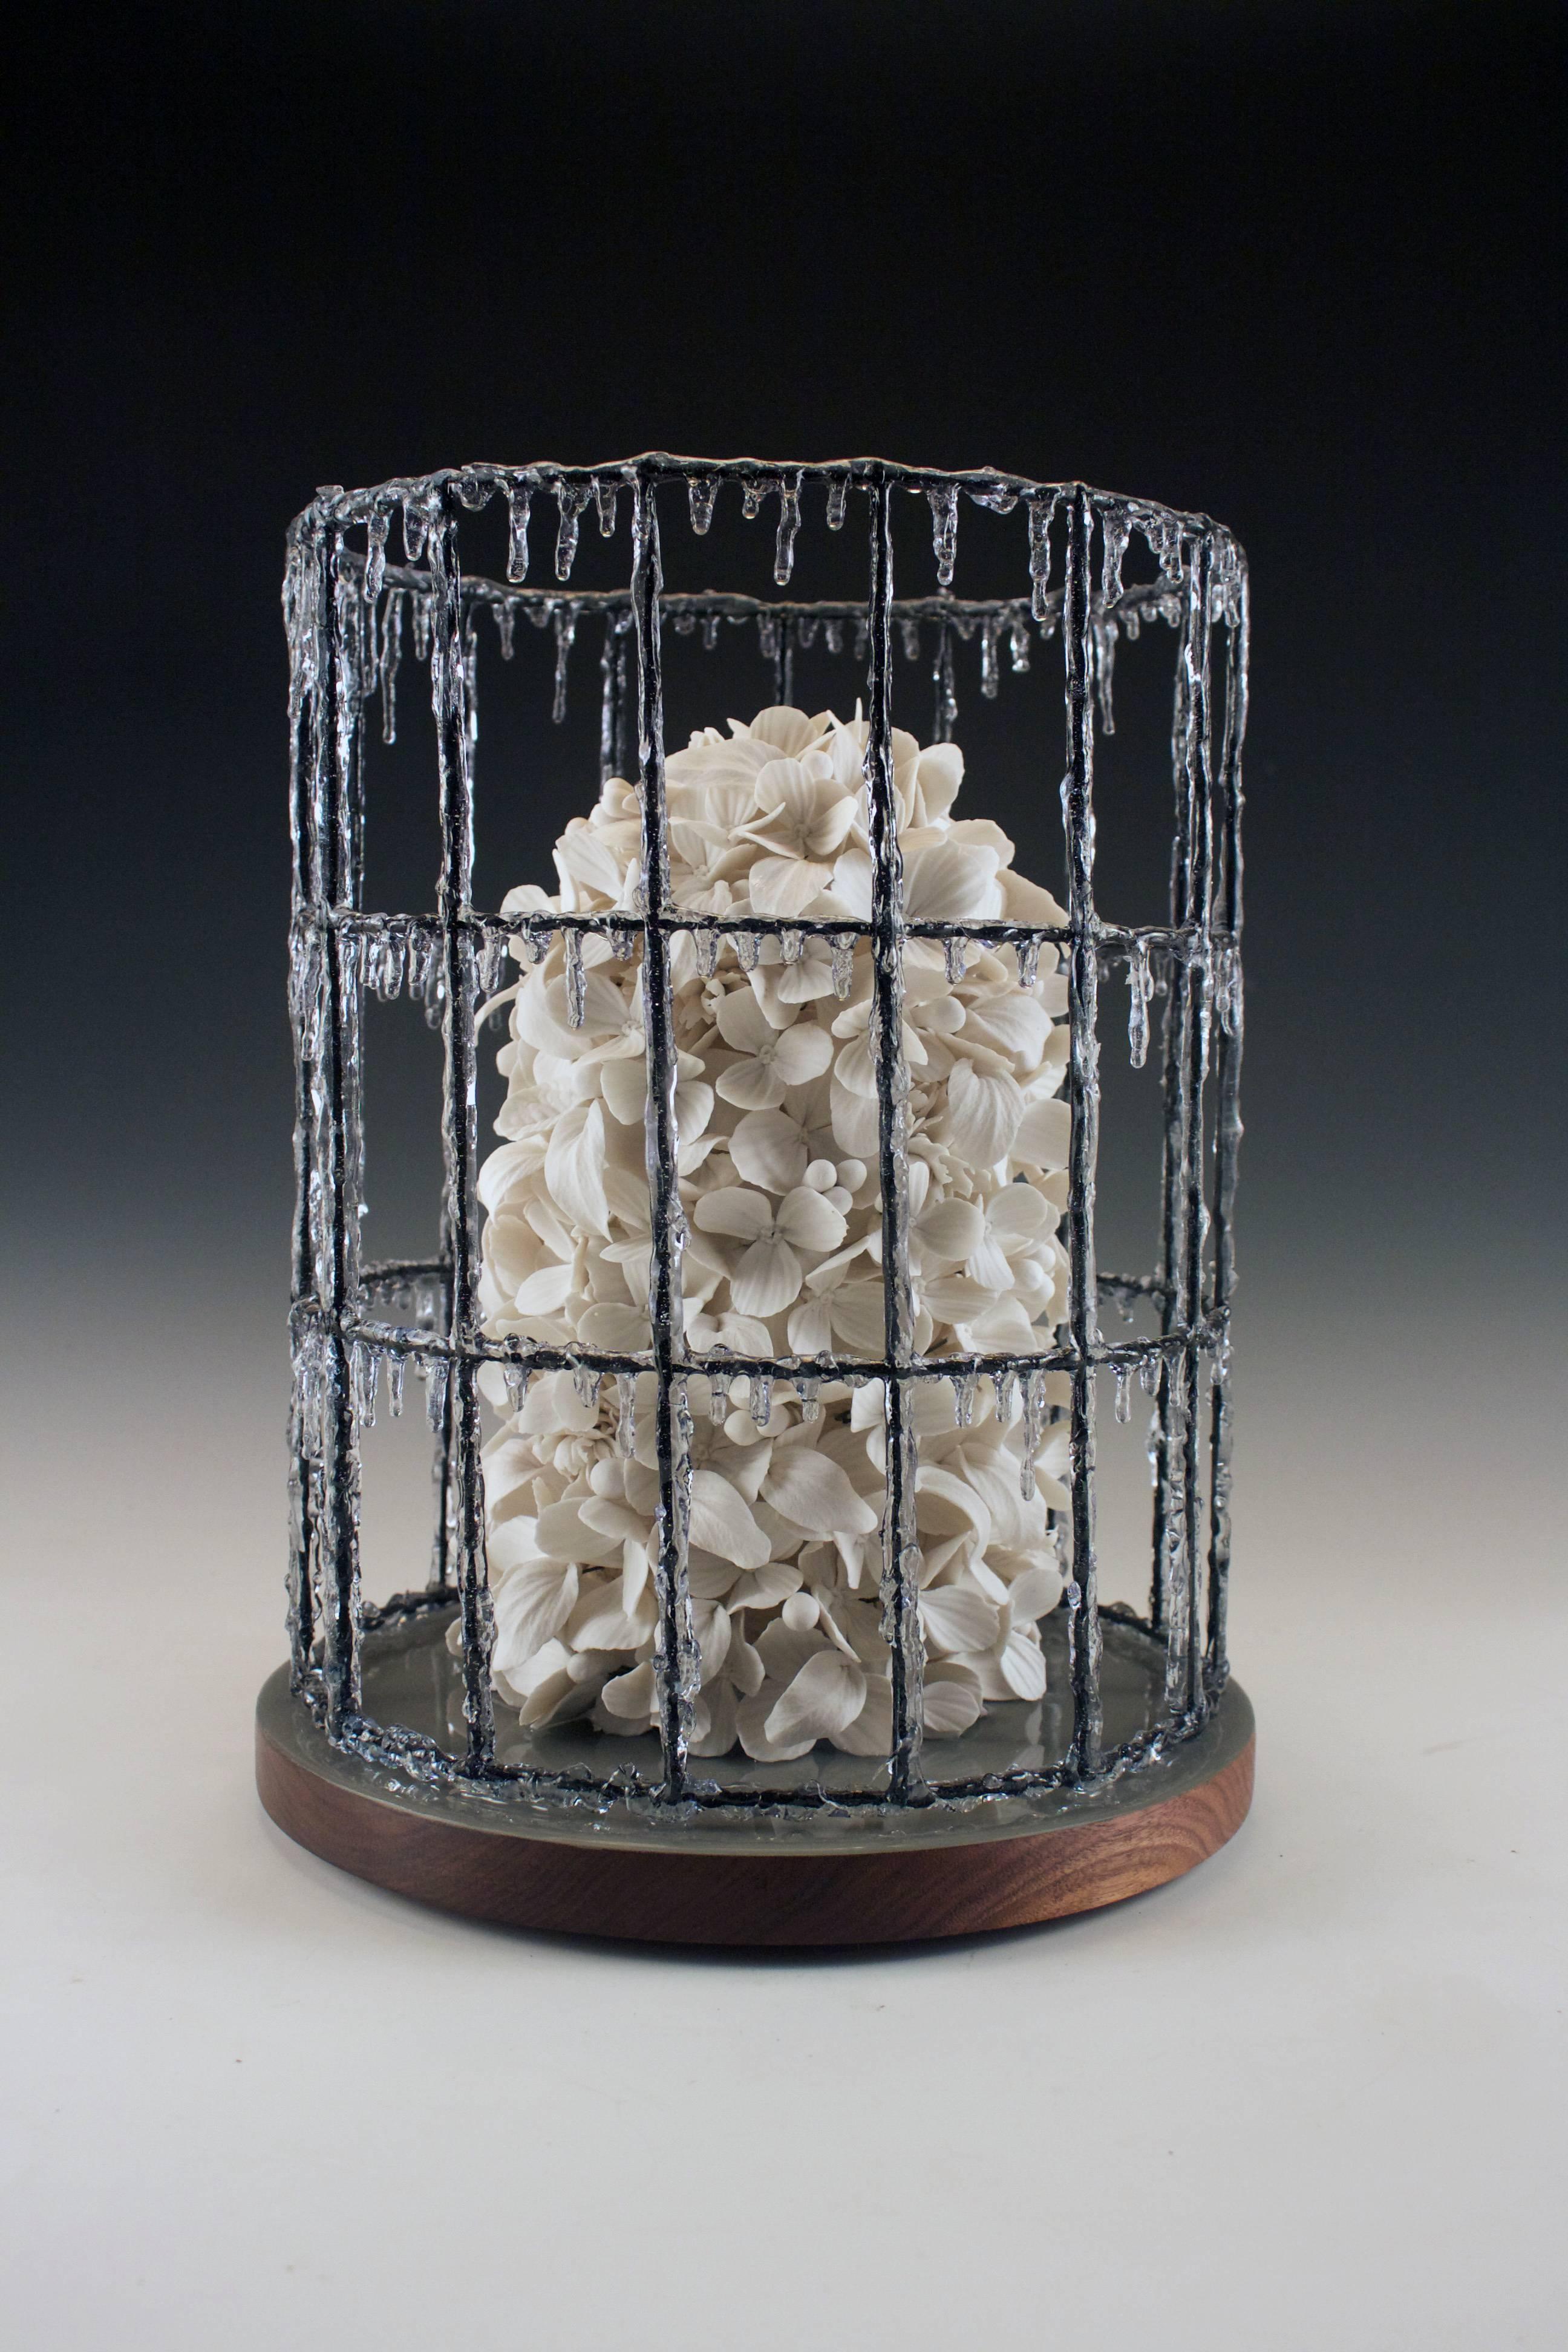 Rain Harris Still-Life Sculpture - "Blanc Buisson", Contemporary, Porcelain, Mixed Media, Sculpture, Resin, Wood